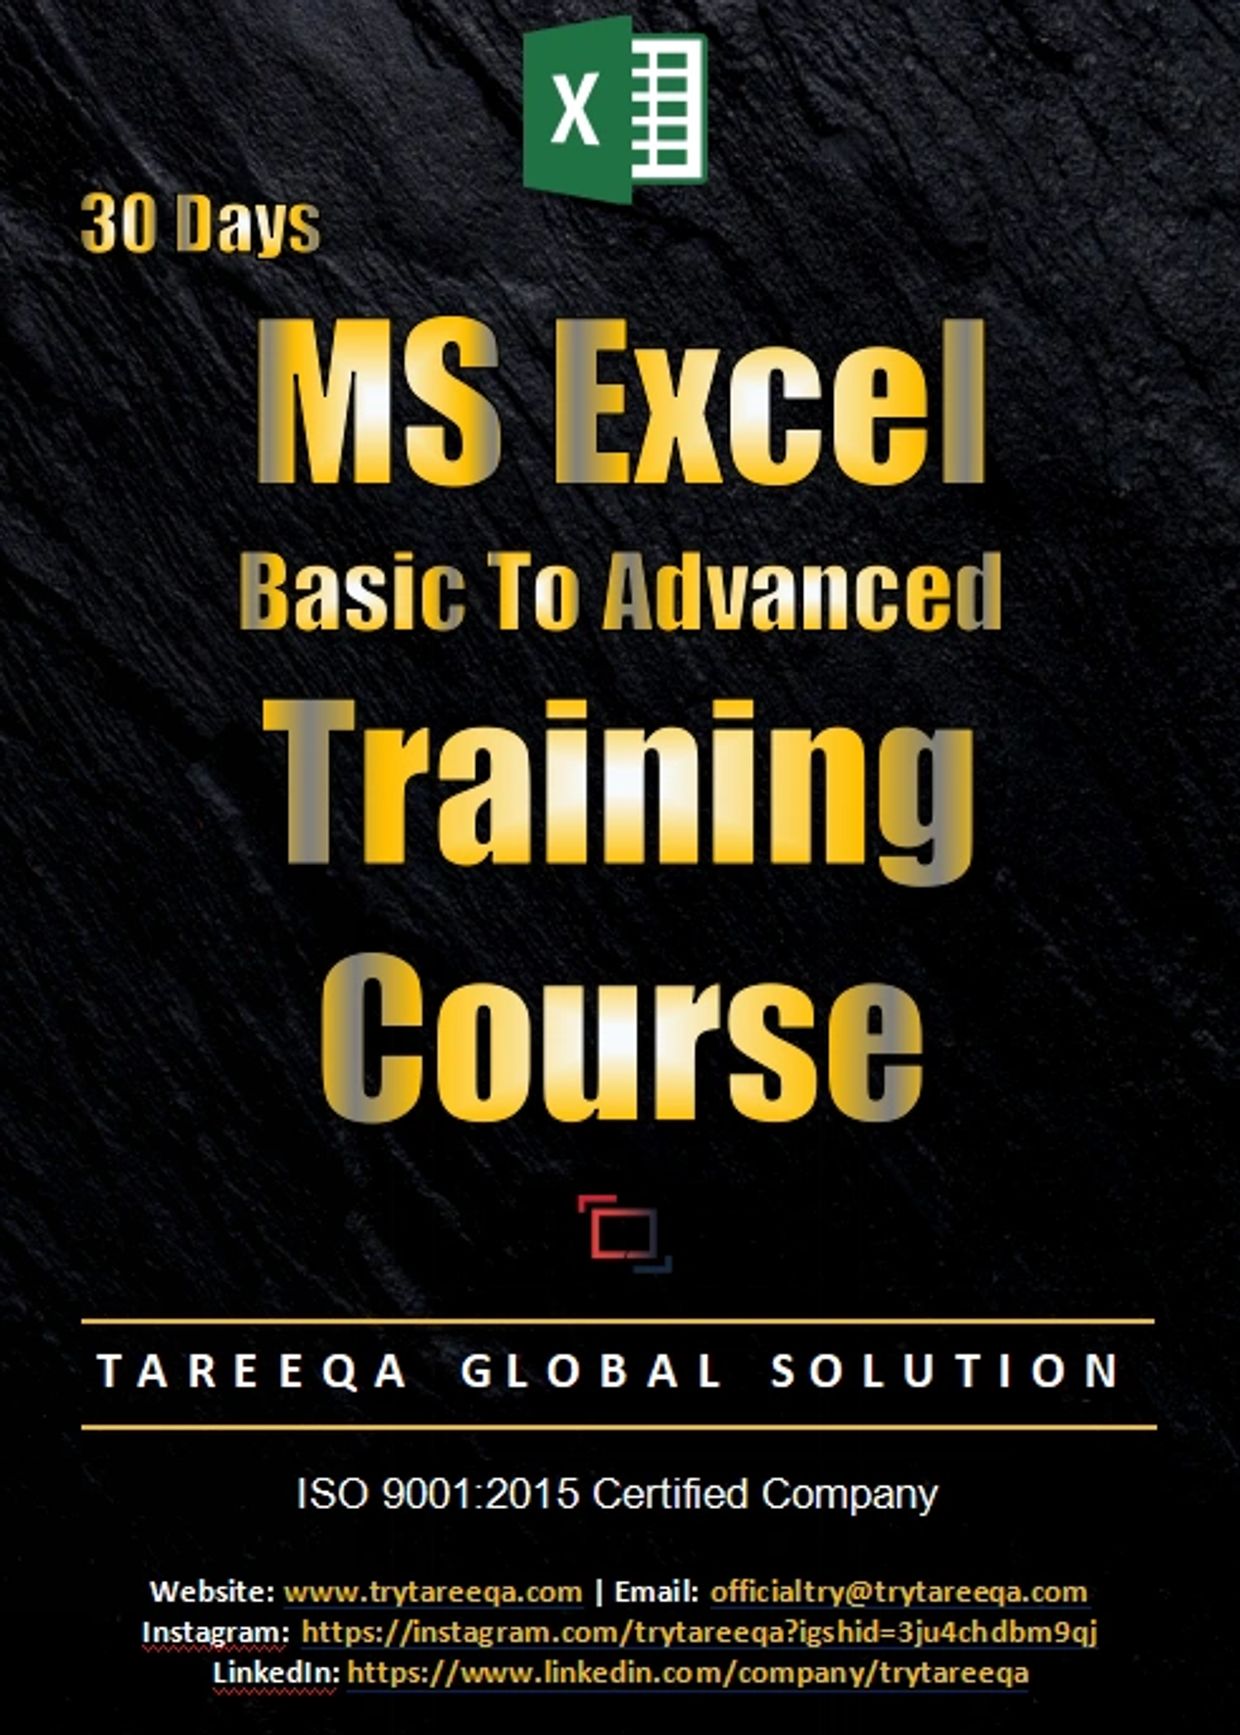 Microsoft Excel Advanced Training